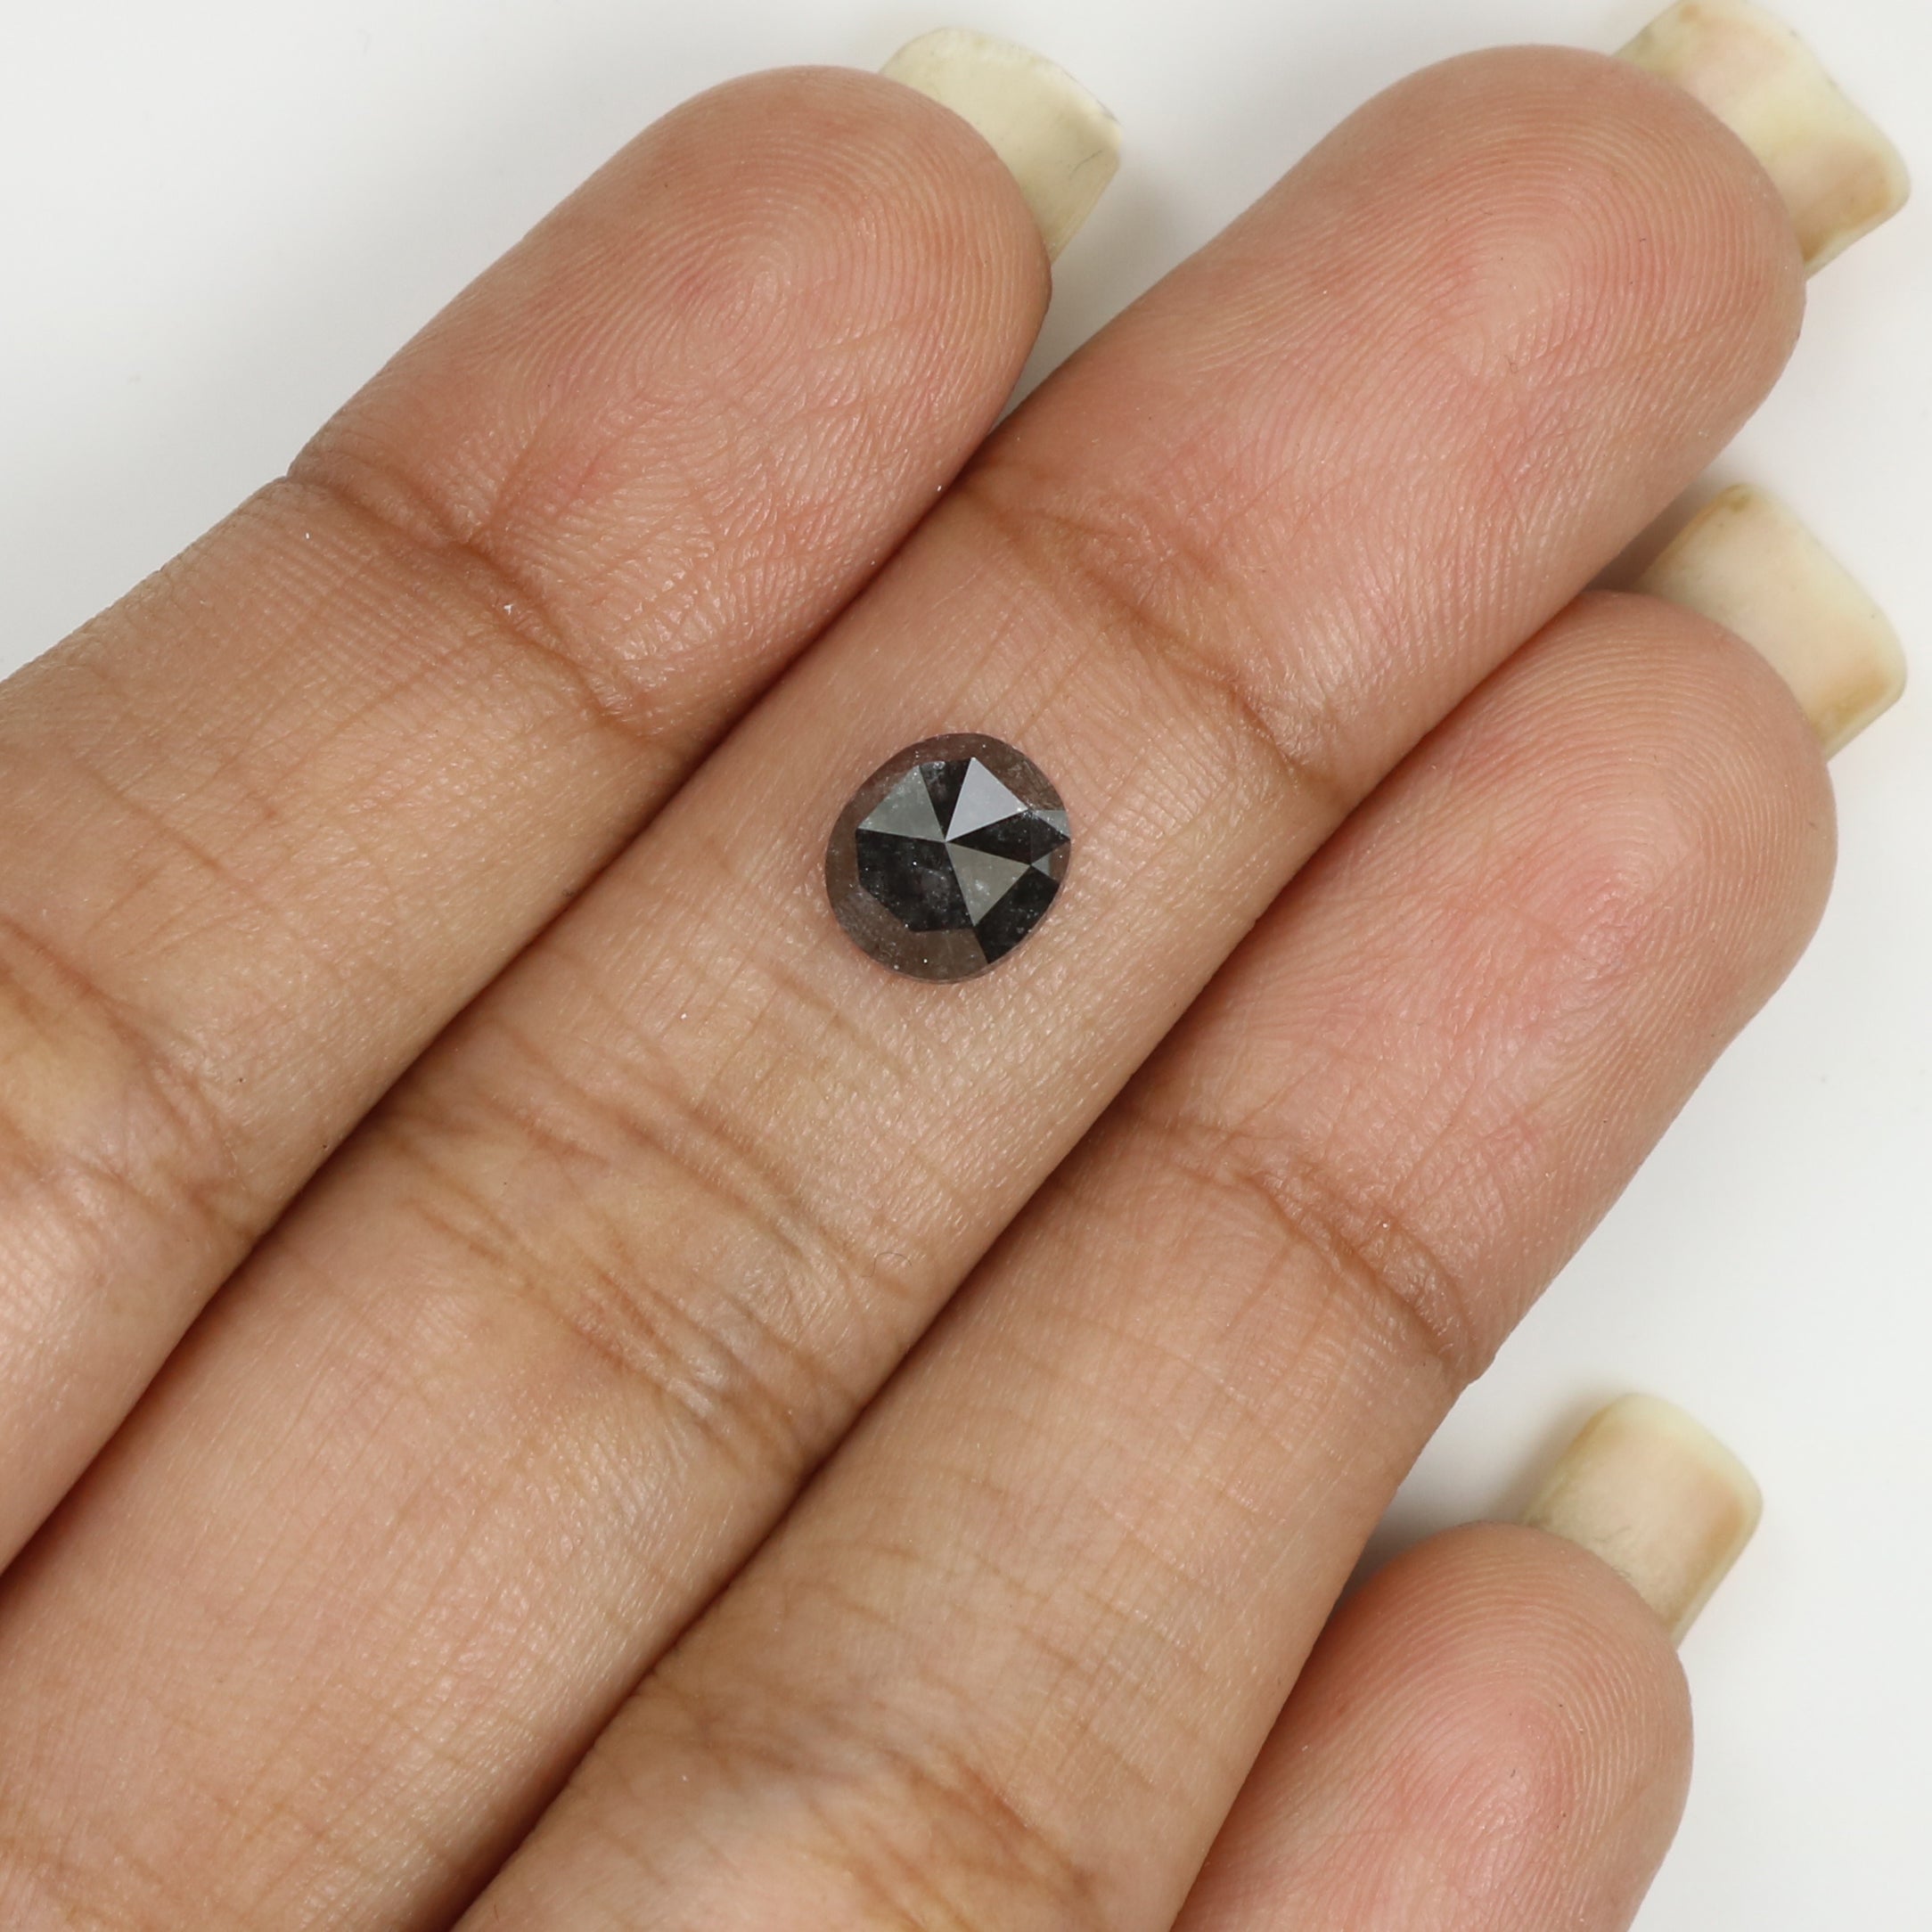 1.44 CT Natural Loose Oval Shape Diamond Salt And Pepper Oval Rose Cut Diamond 7.10 MM Black Grey Color Oval Shape Rose Cut Diamond LQ8009